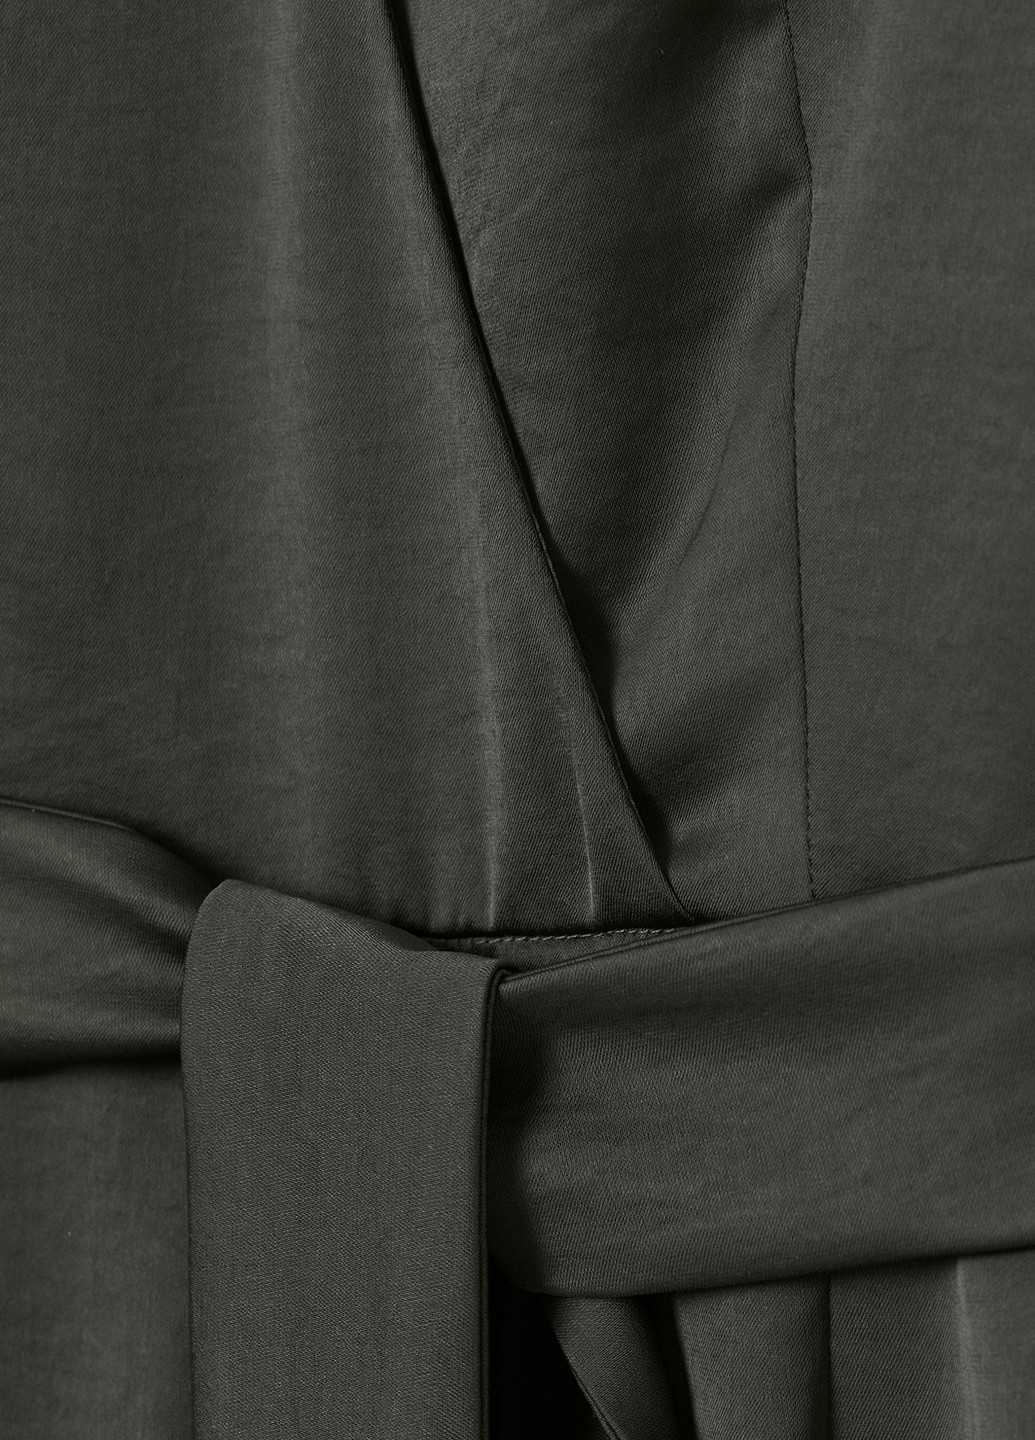 Комбинезон H&M комбинезон-брюки однотонный темно-зелёный кэжуал полиэстер